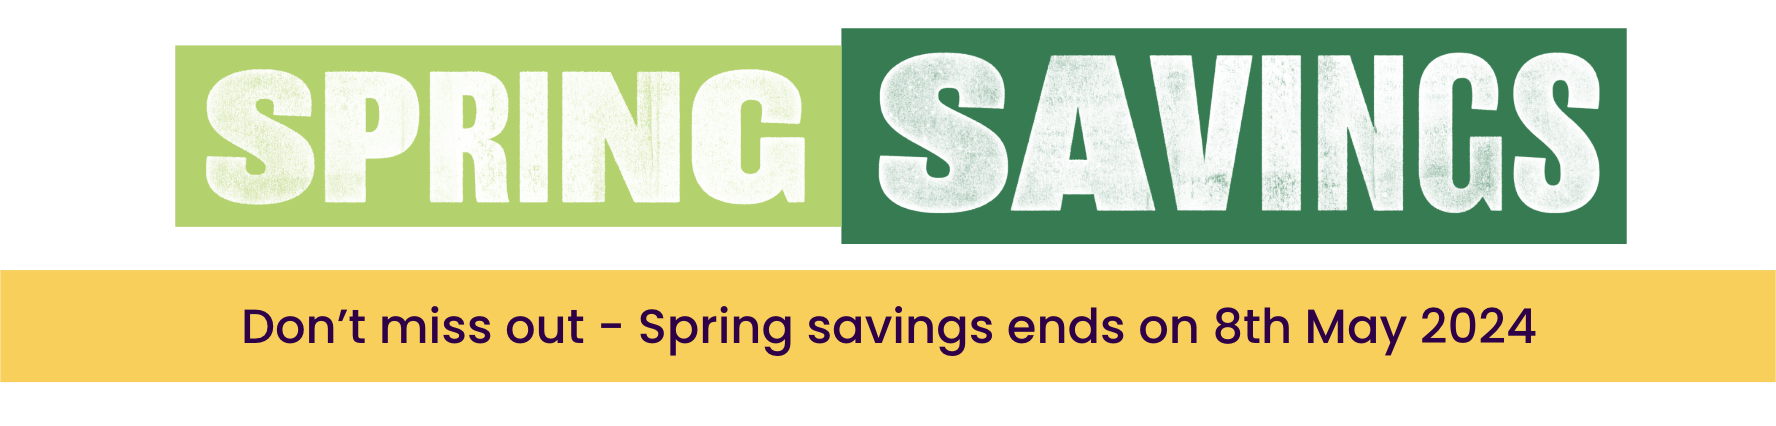 Spring savings end 8th may